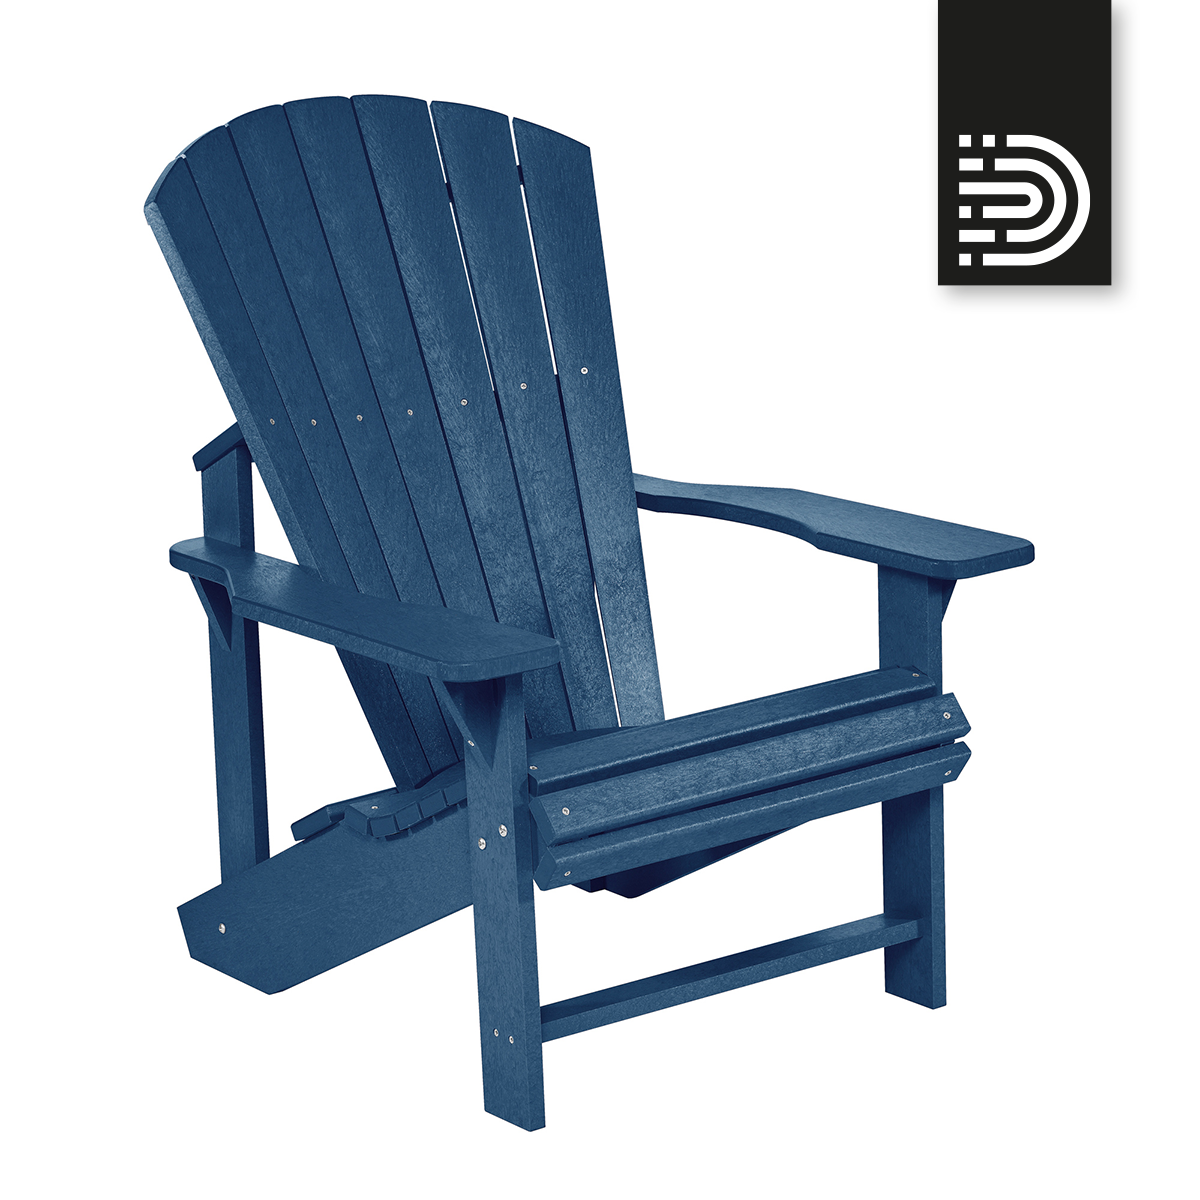  C01 Classic Adirondack Chair - navy blue 20